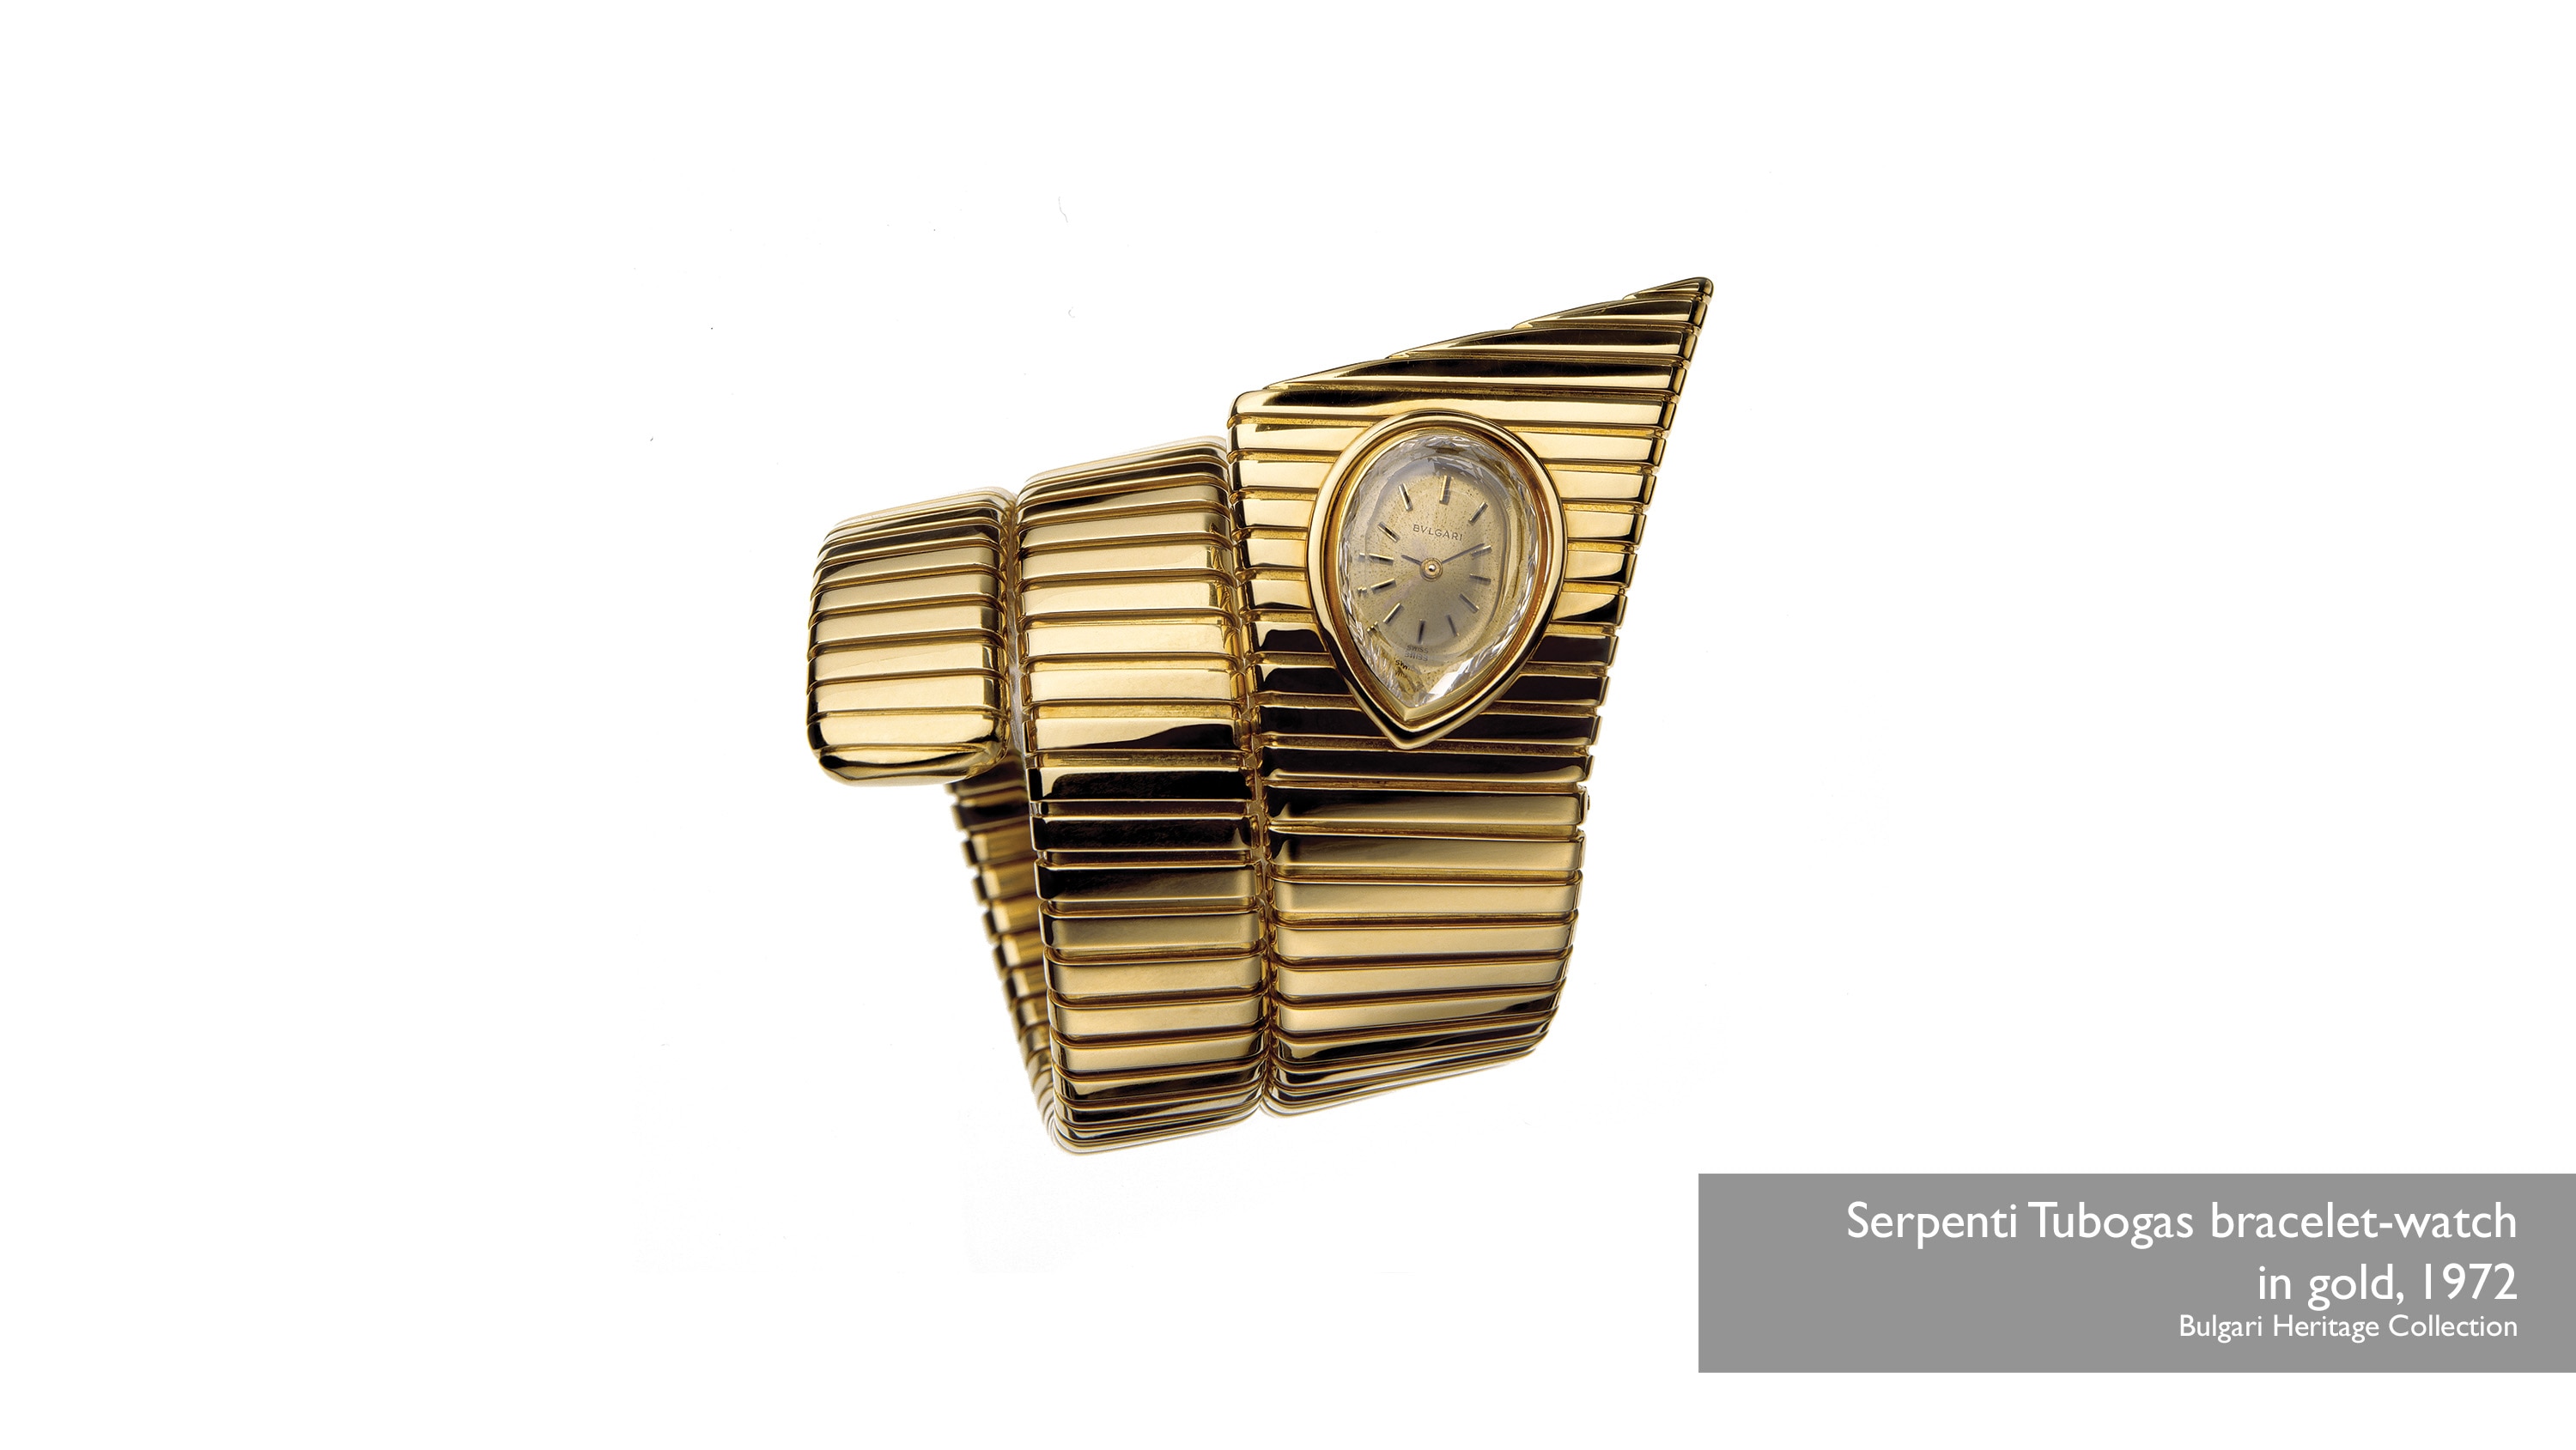 Serpenti Tubogas bracelet-watch in gold, 1972 Bulgari Heritage Collection